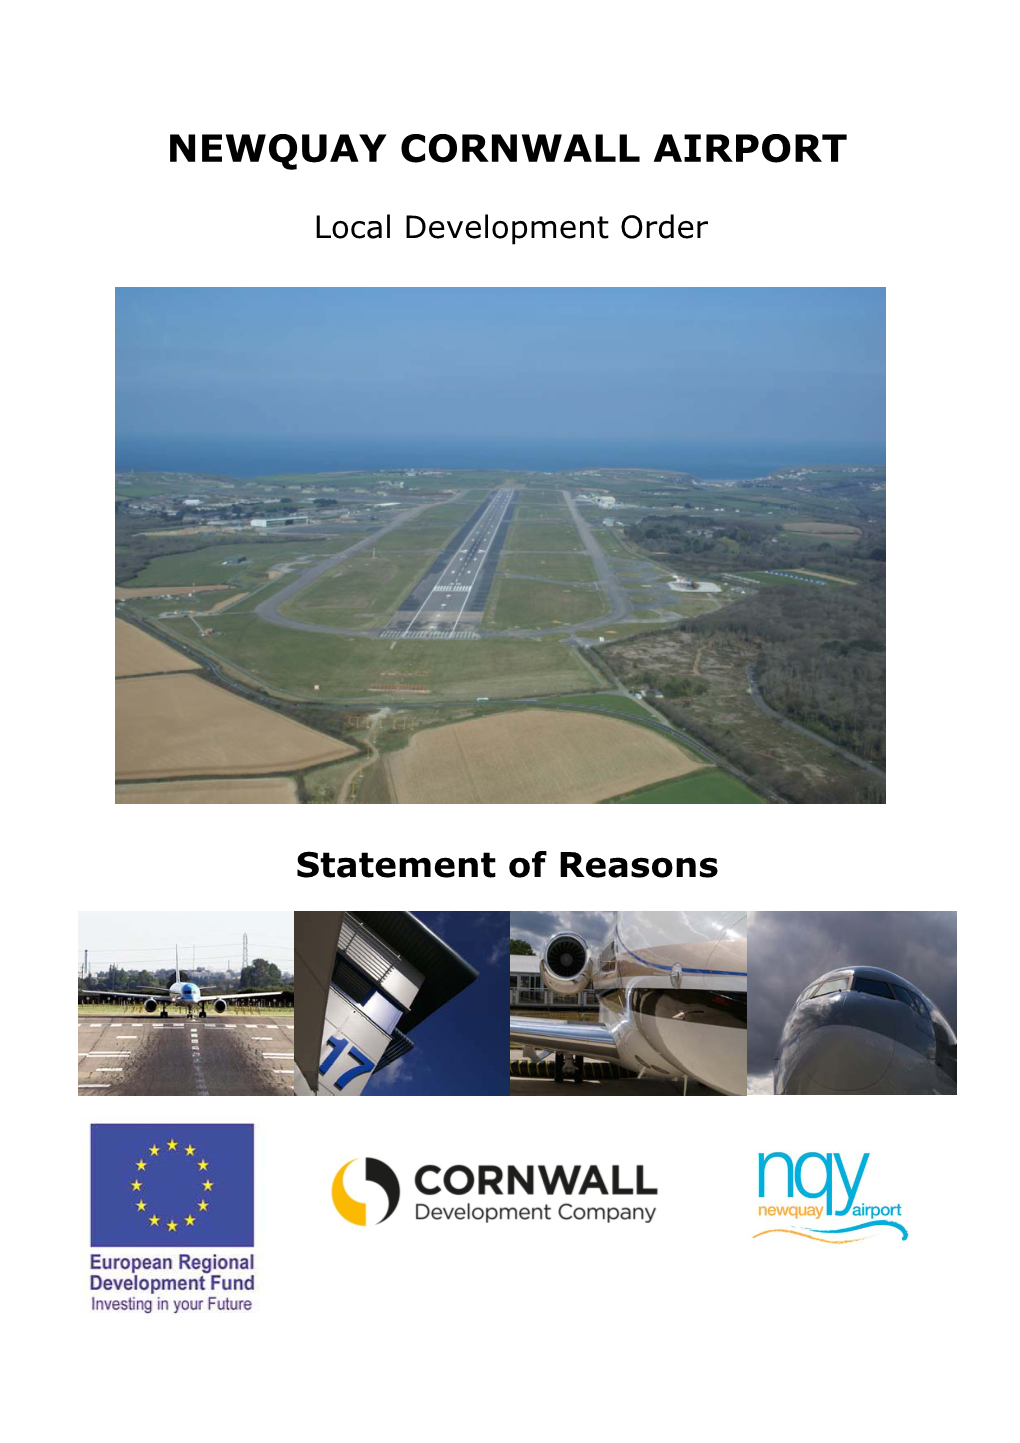 Newquay Cornwall Airport Local Development Order Class a Development at an Airport